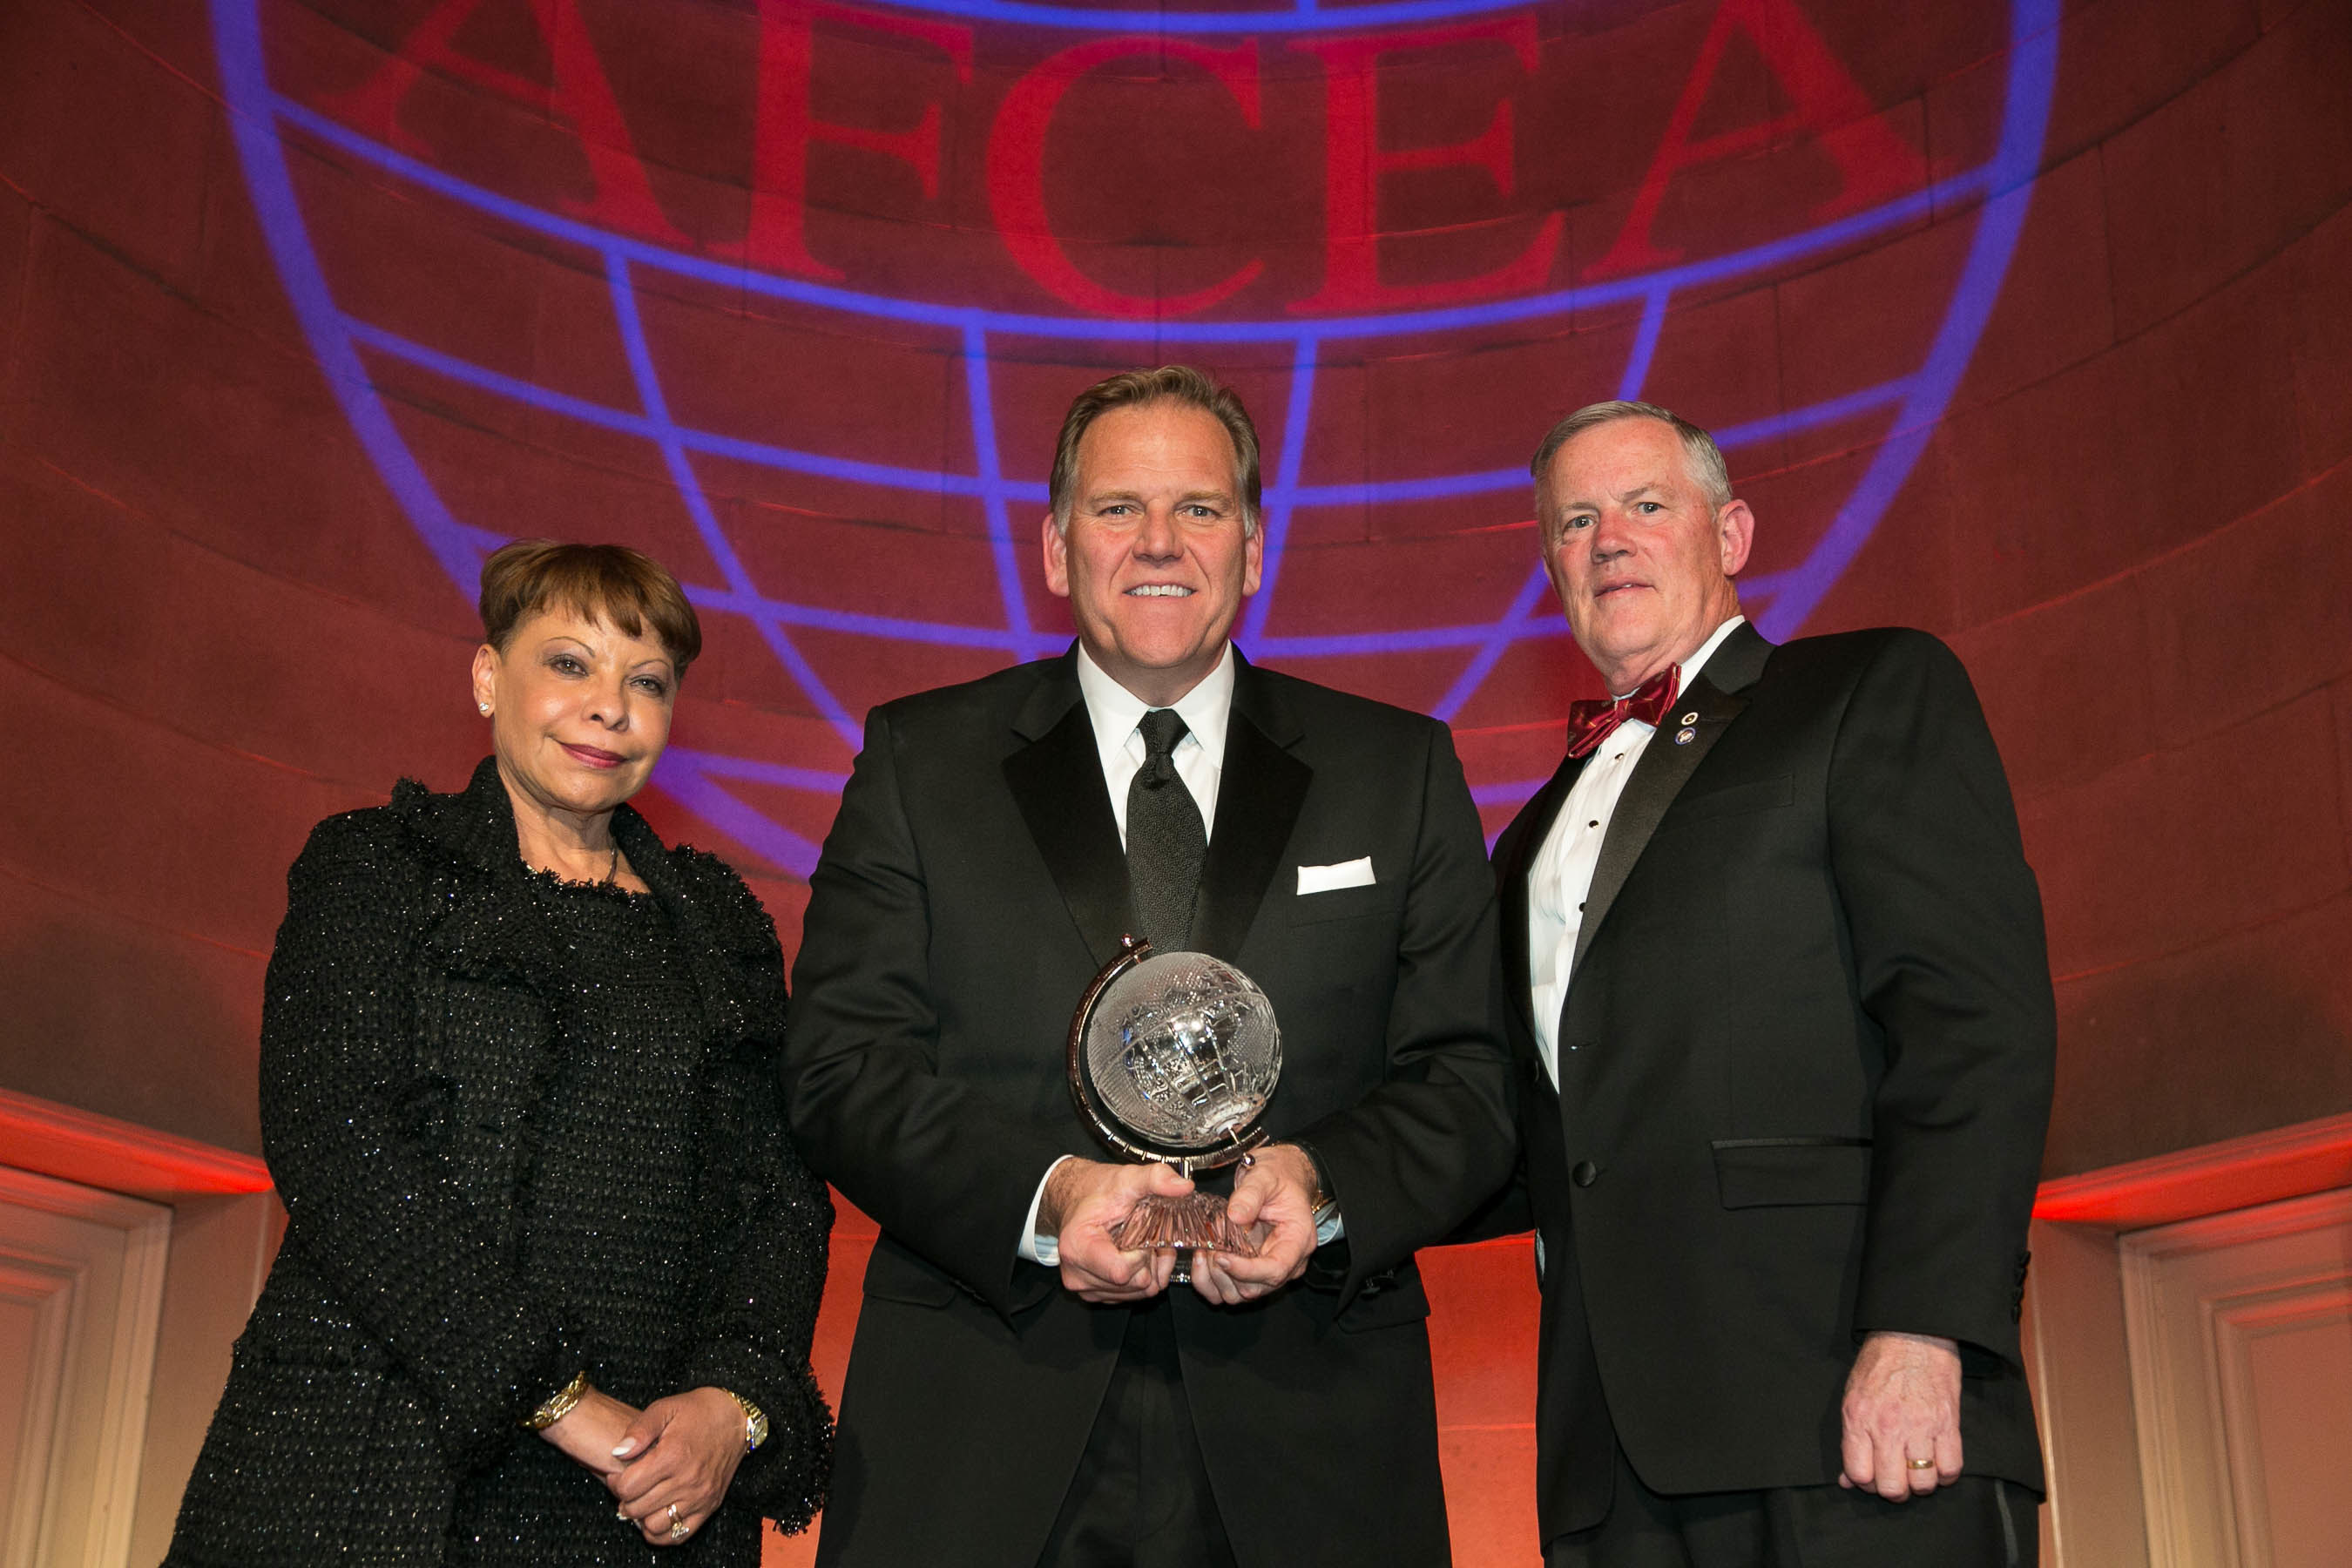 Rep. Michael J. Rogers (R-MI) (c), receives the 2014 AFCEA David Sarnoff Award from Lt. Gen. Robert M. Shea, USMC (Ret.) (r), president and chief executive officer, AFCEA International, and Linda Gooden, chair of the board, AFCEA International.